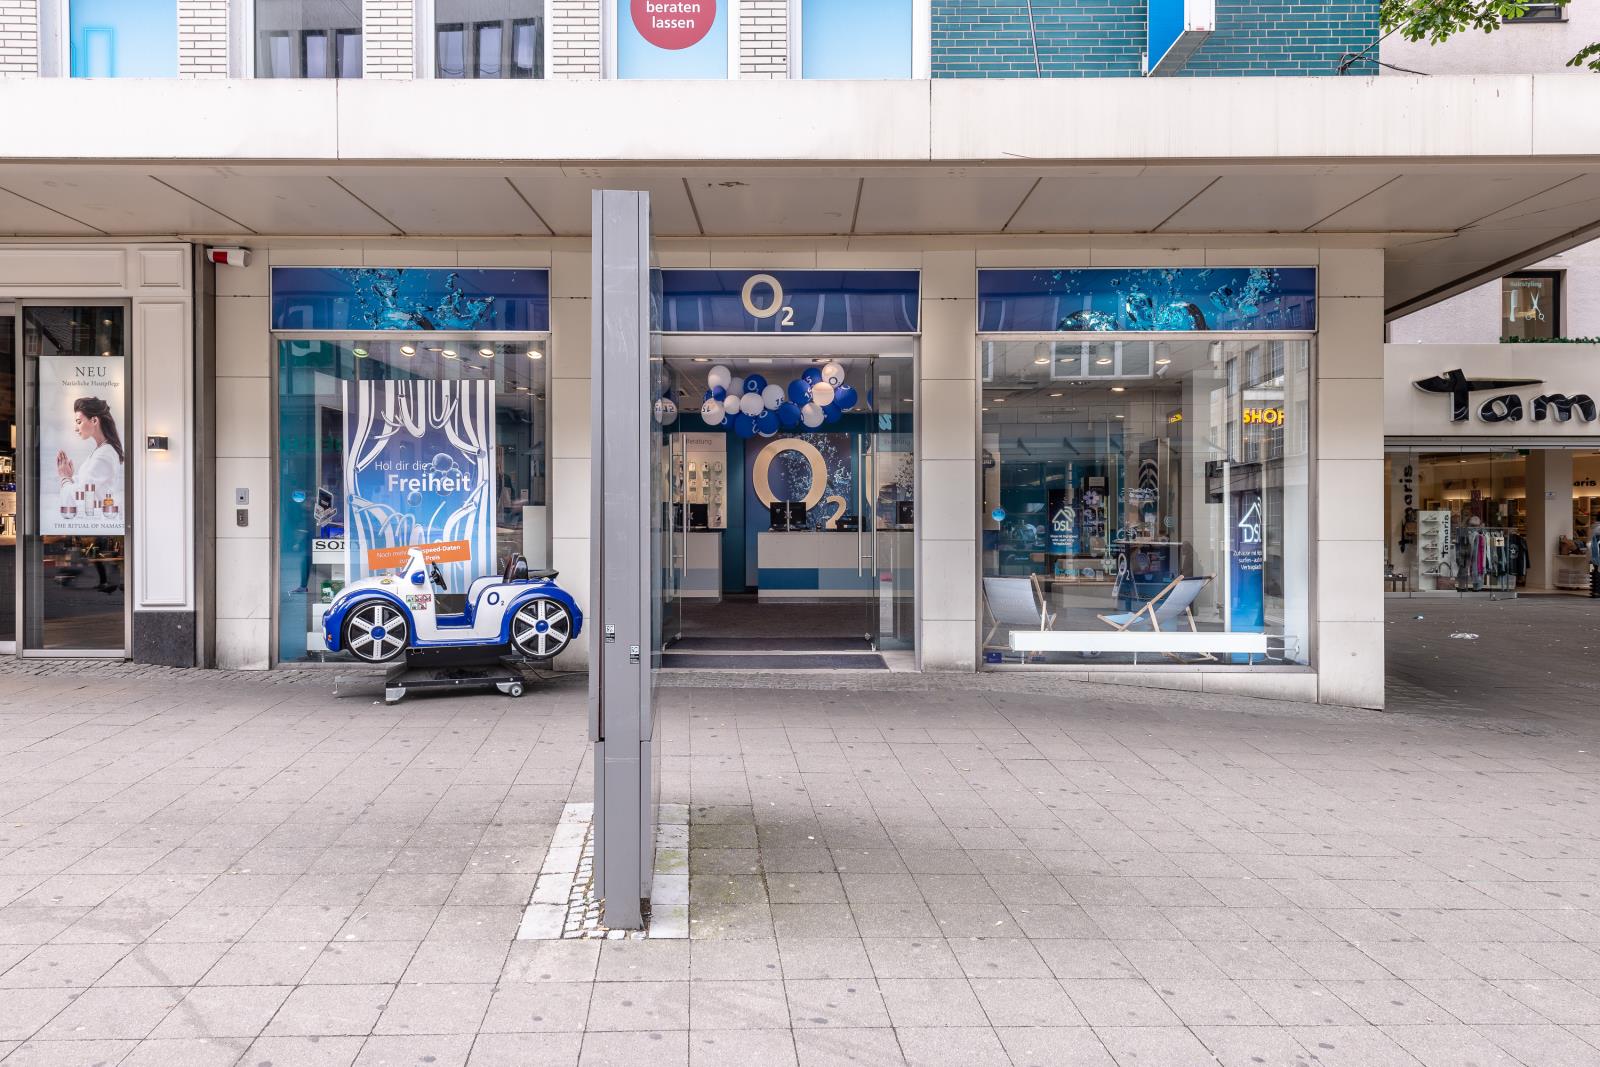 o2 Shop, Kettwiger Str. 43 in Essen